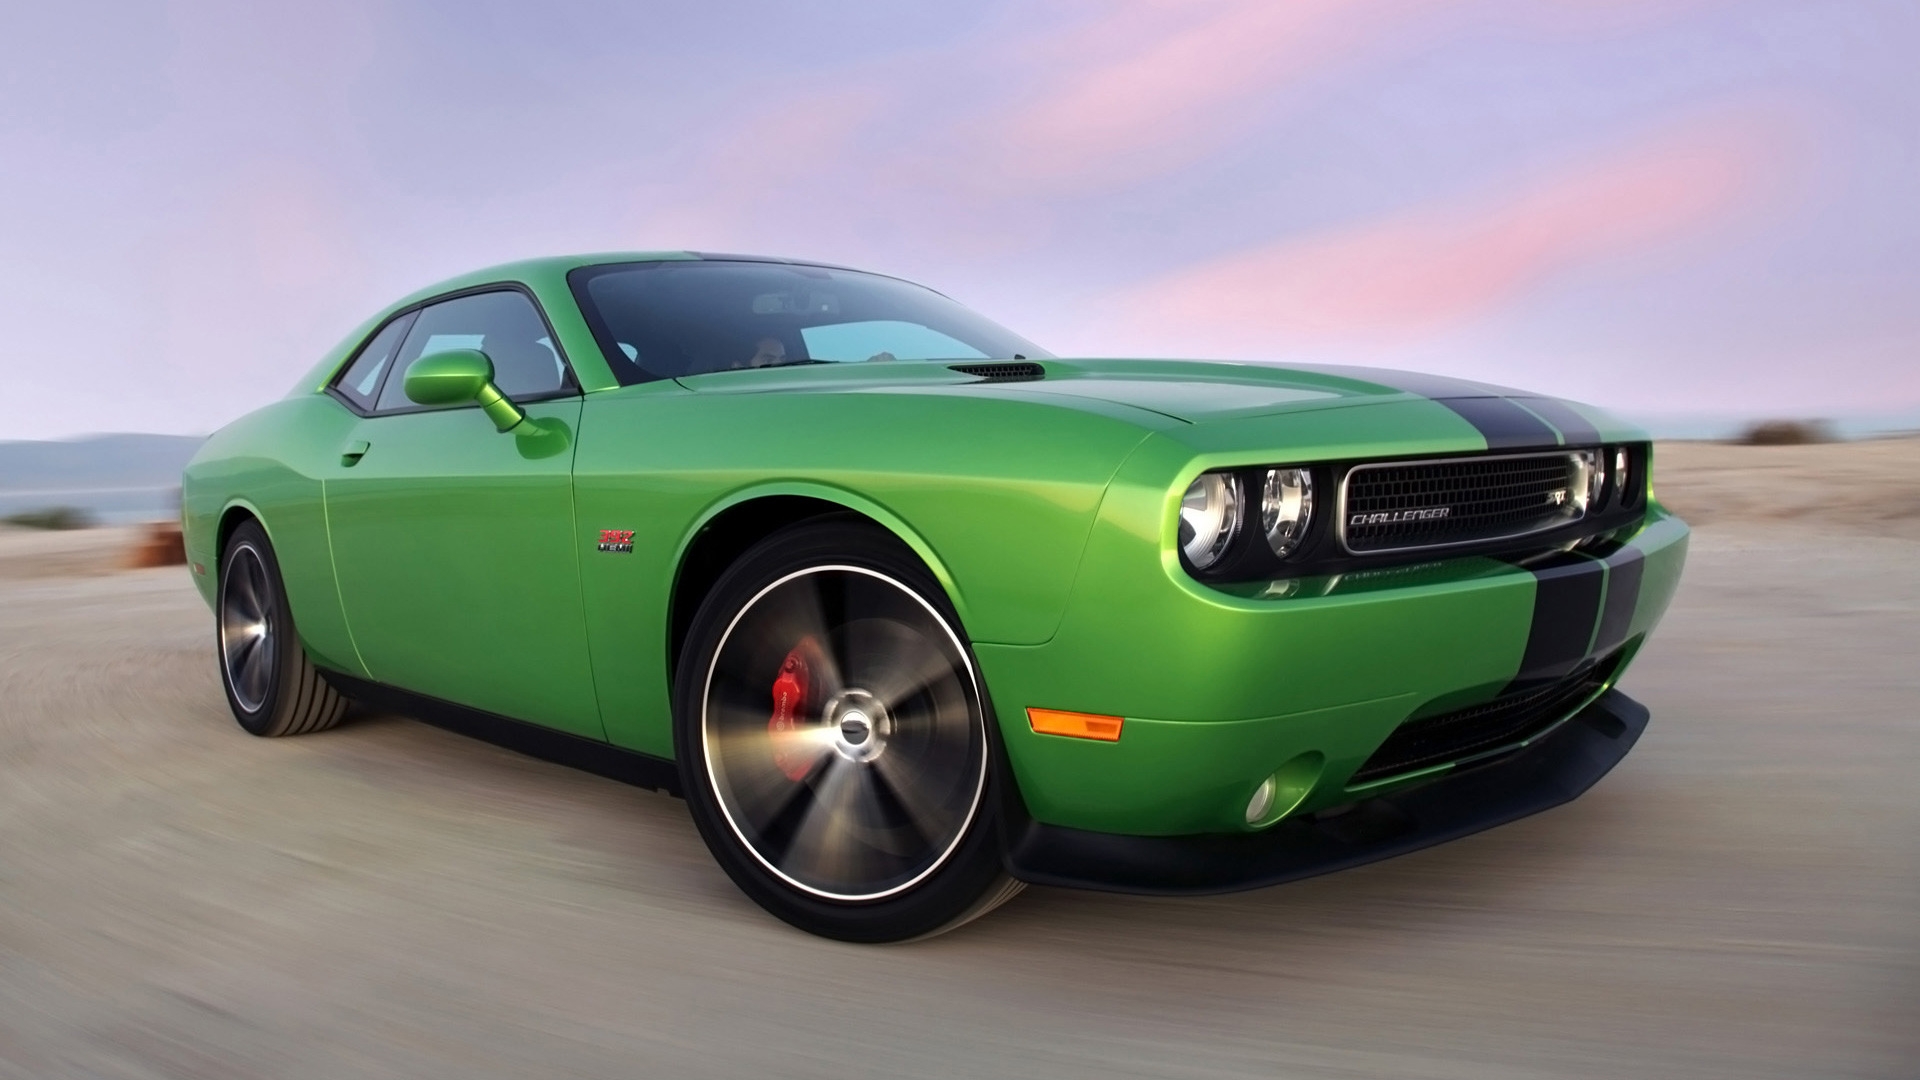 2011 Dodge Challenger Green for 1920 x 1080 HDTV 1080p resolution